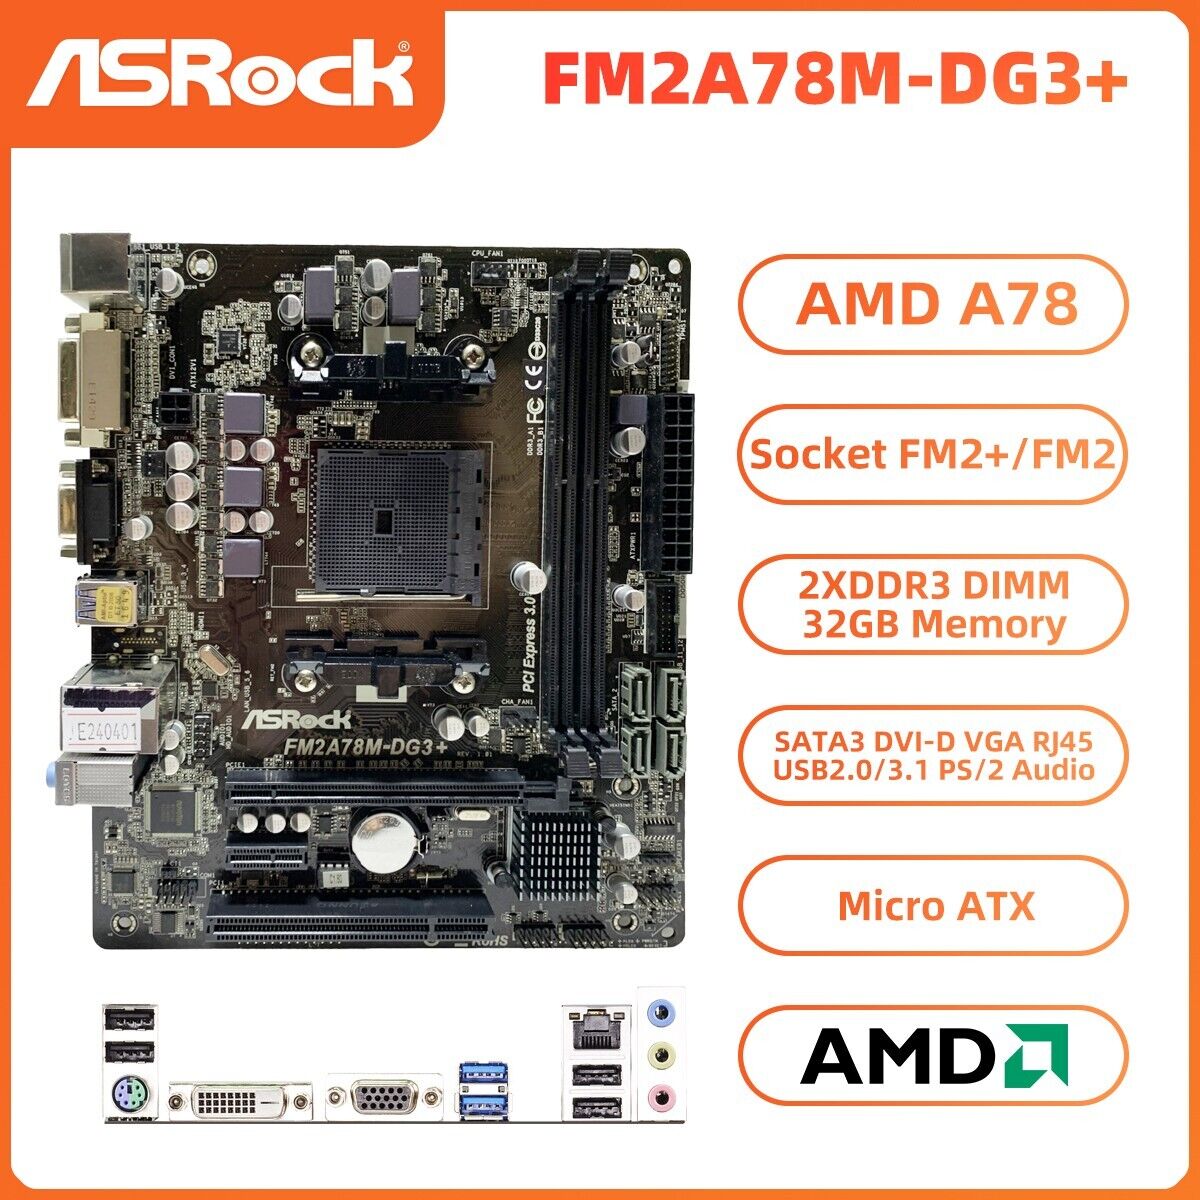 ASRock FM2A78M-DG3+ Motherboard M-ATX AMD A78 FM2+/FM2 DDR3 SATA3 DVI-D Audio